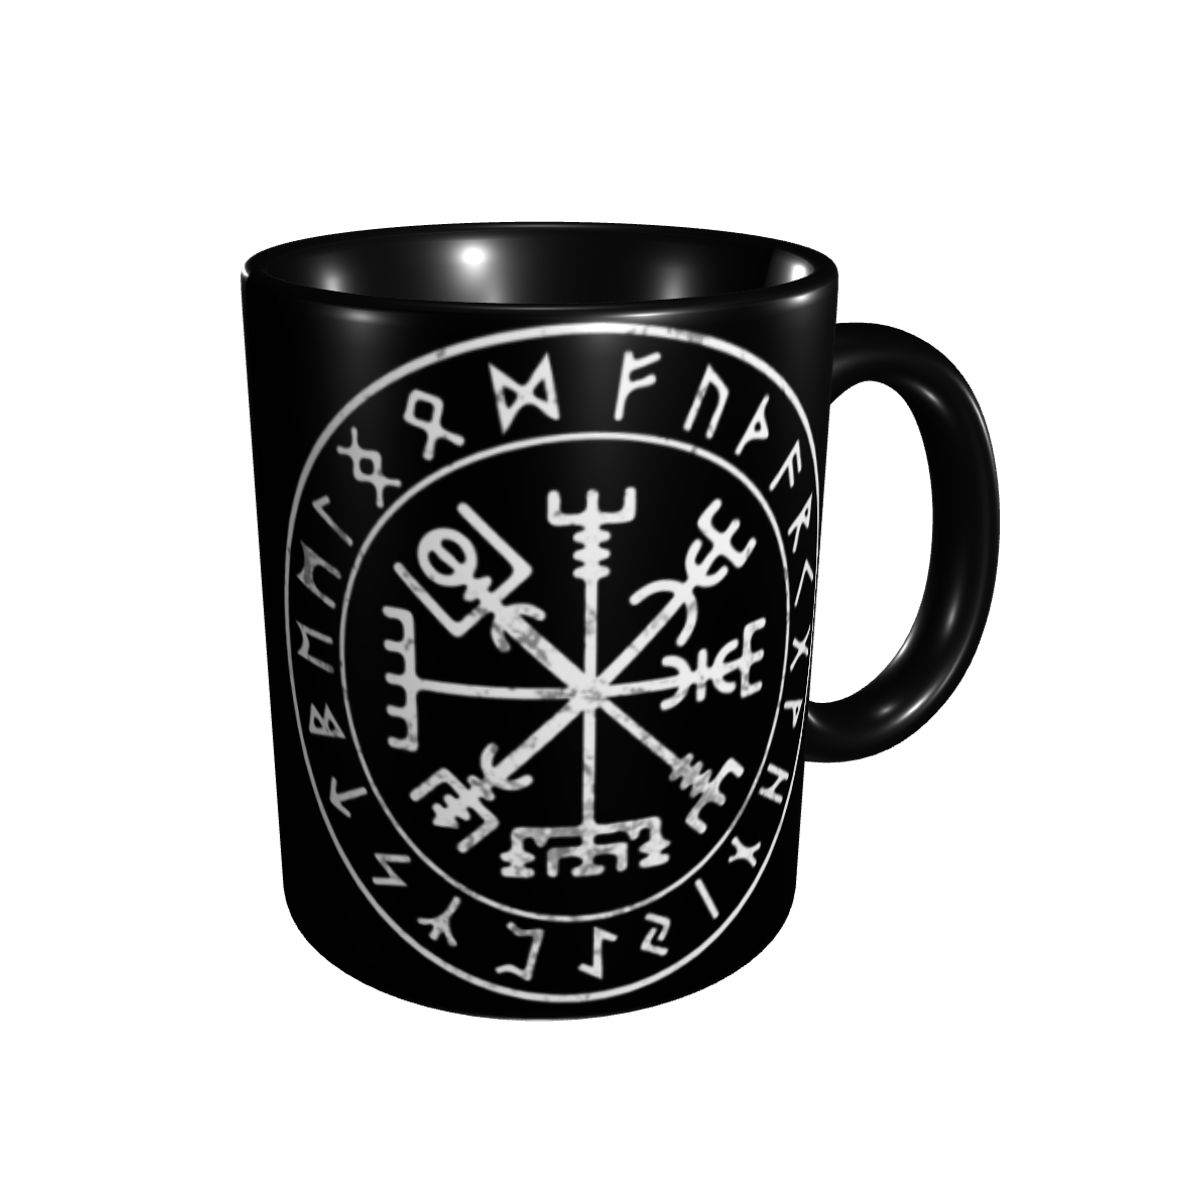 Vegvisir Viking Compass Two-Tone Coffee Mug